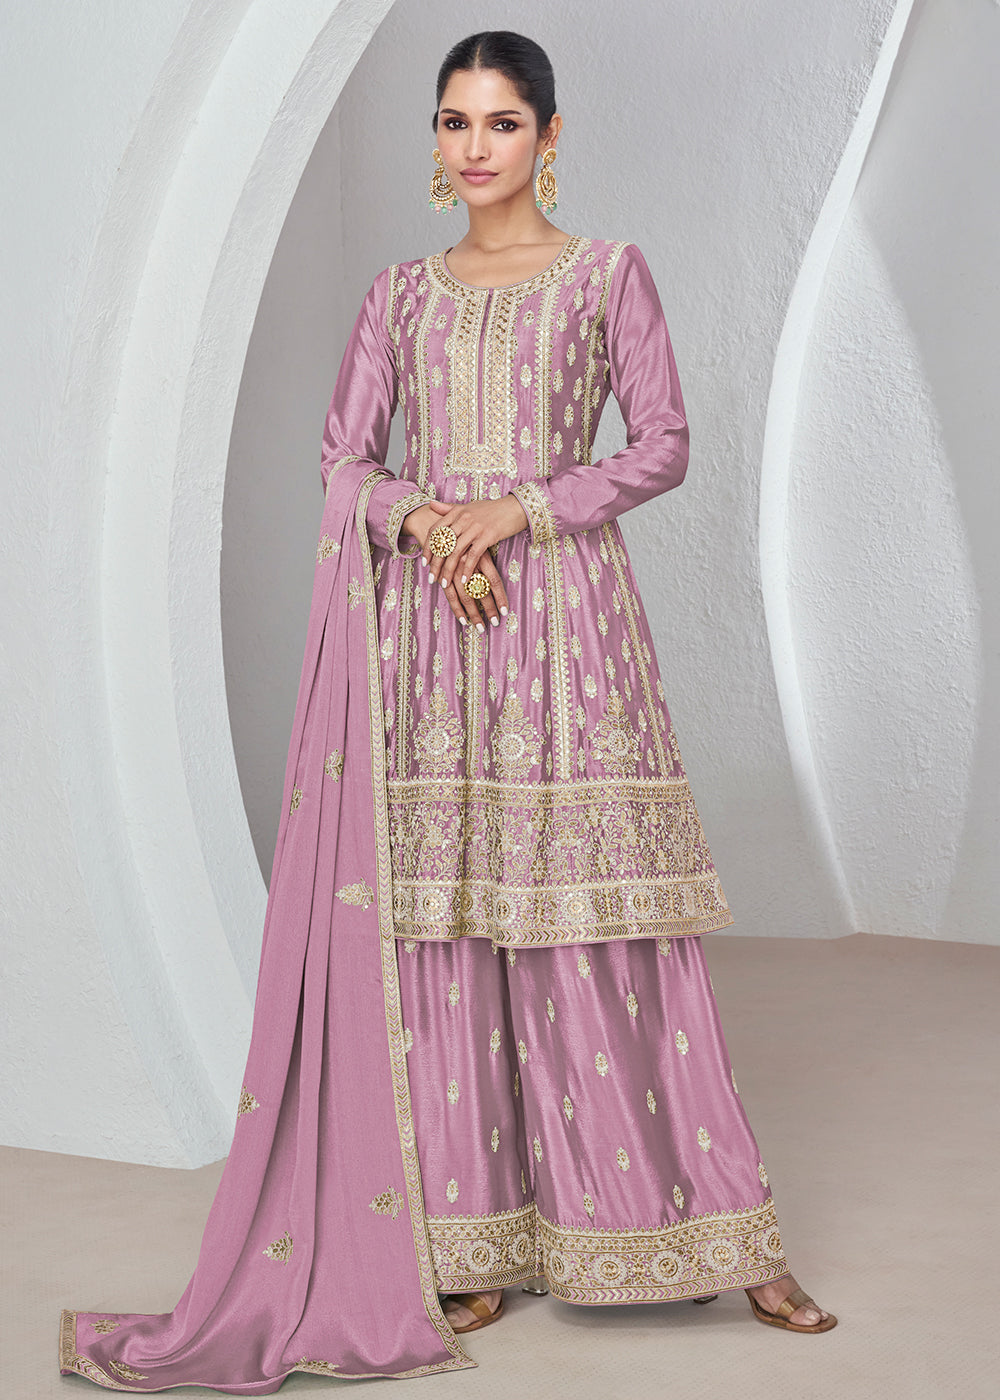 Buy Now Lilac Purple Chinnon Silk Wedding Festive Palazzo Dress Online in USA, UK, Canada, Germany, Australia & Worldwide at Empress Clothing. 